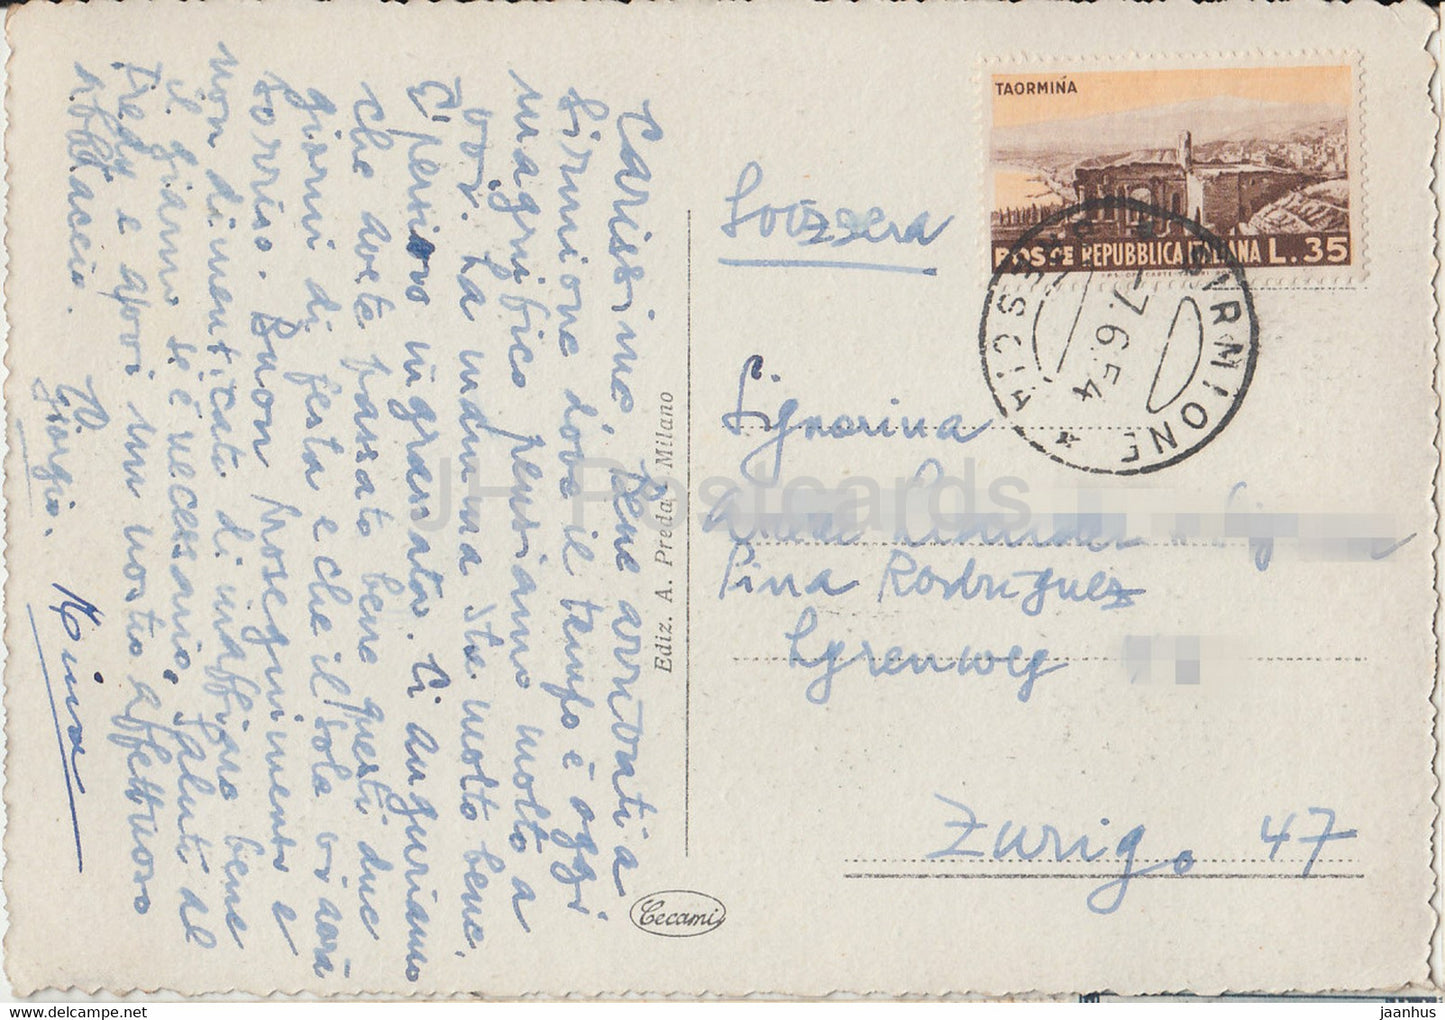 Lago di Garda - Sirmione - sailing boat - old postcard - 1954 - Italy - used